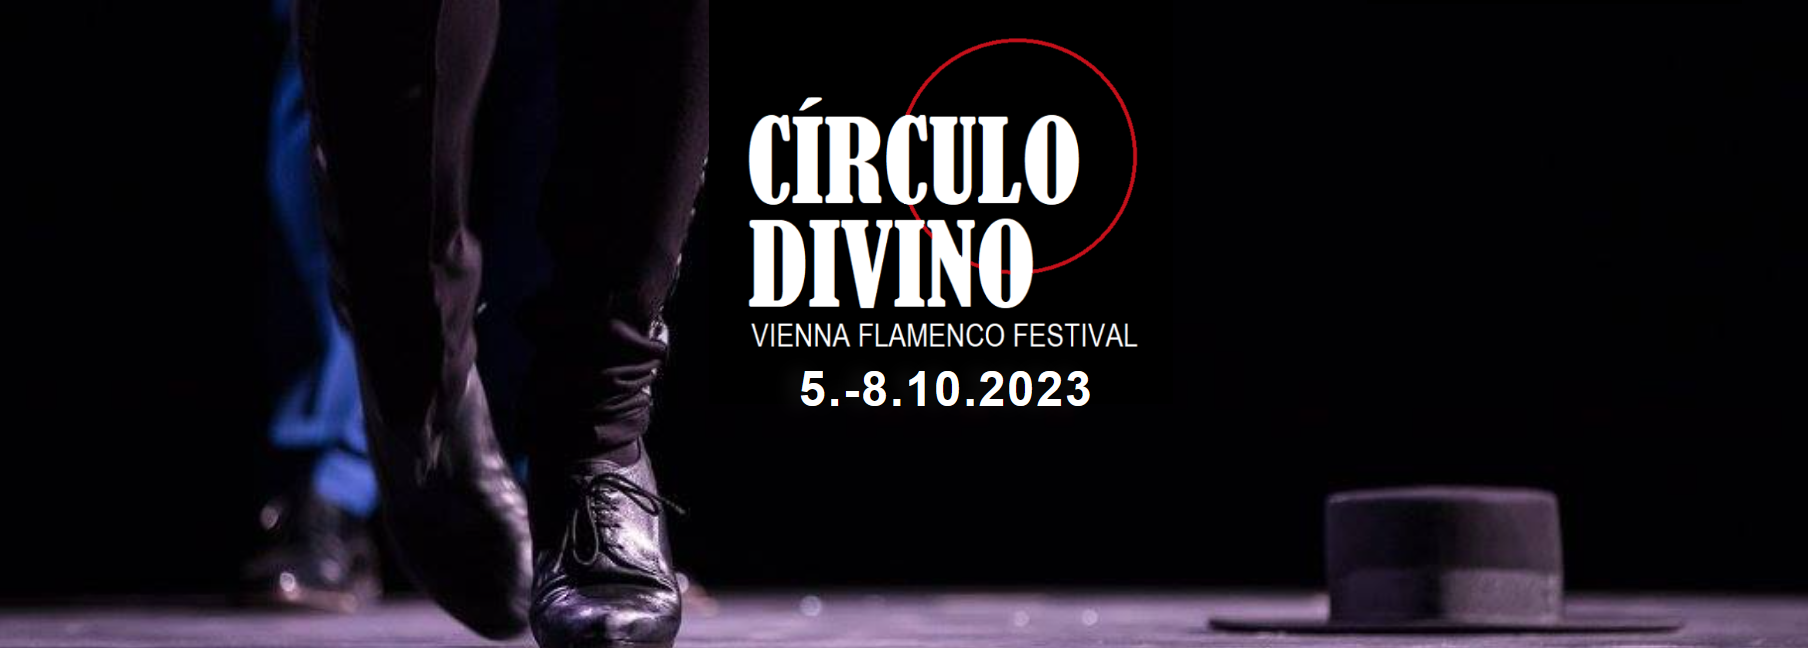 CÍRCULO DIVINO - Vienna Flamenco Festival